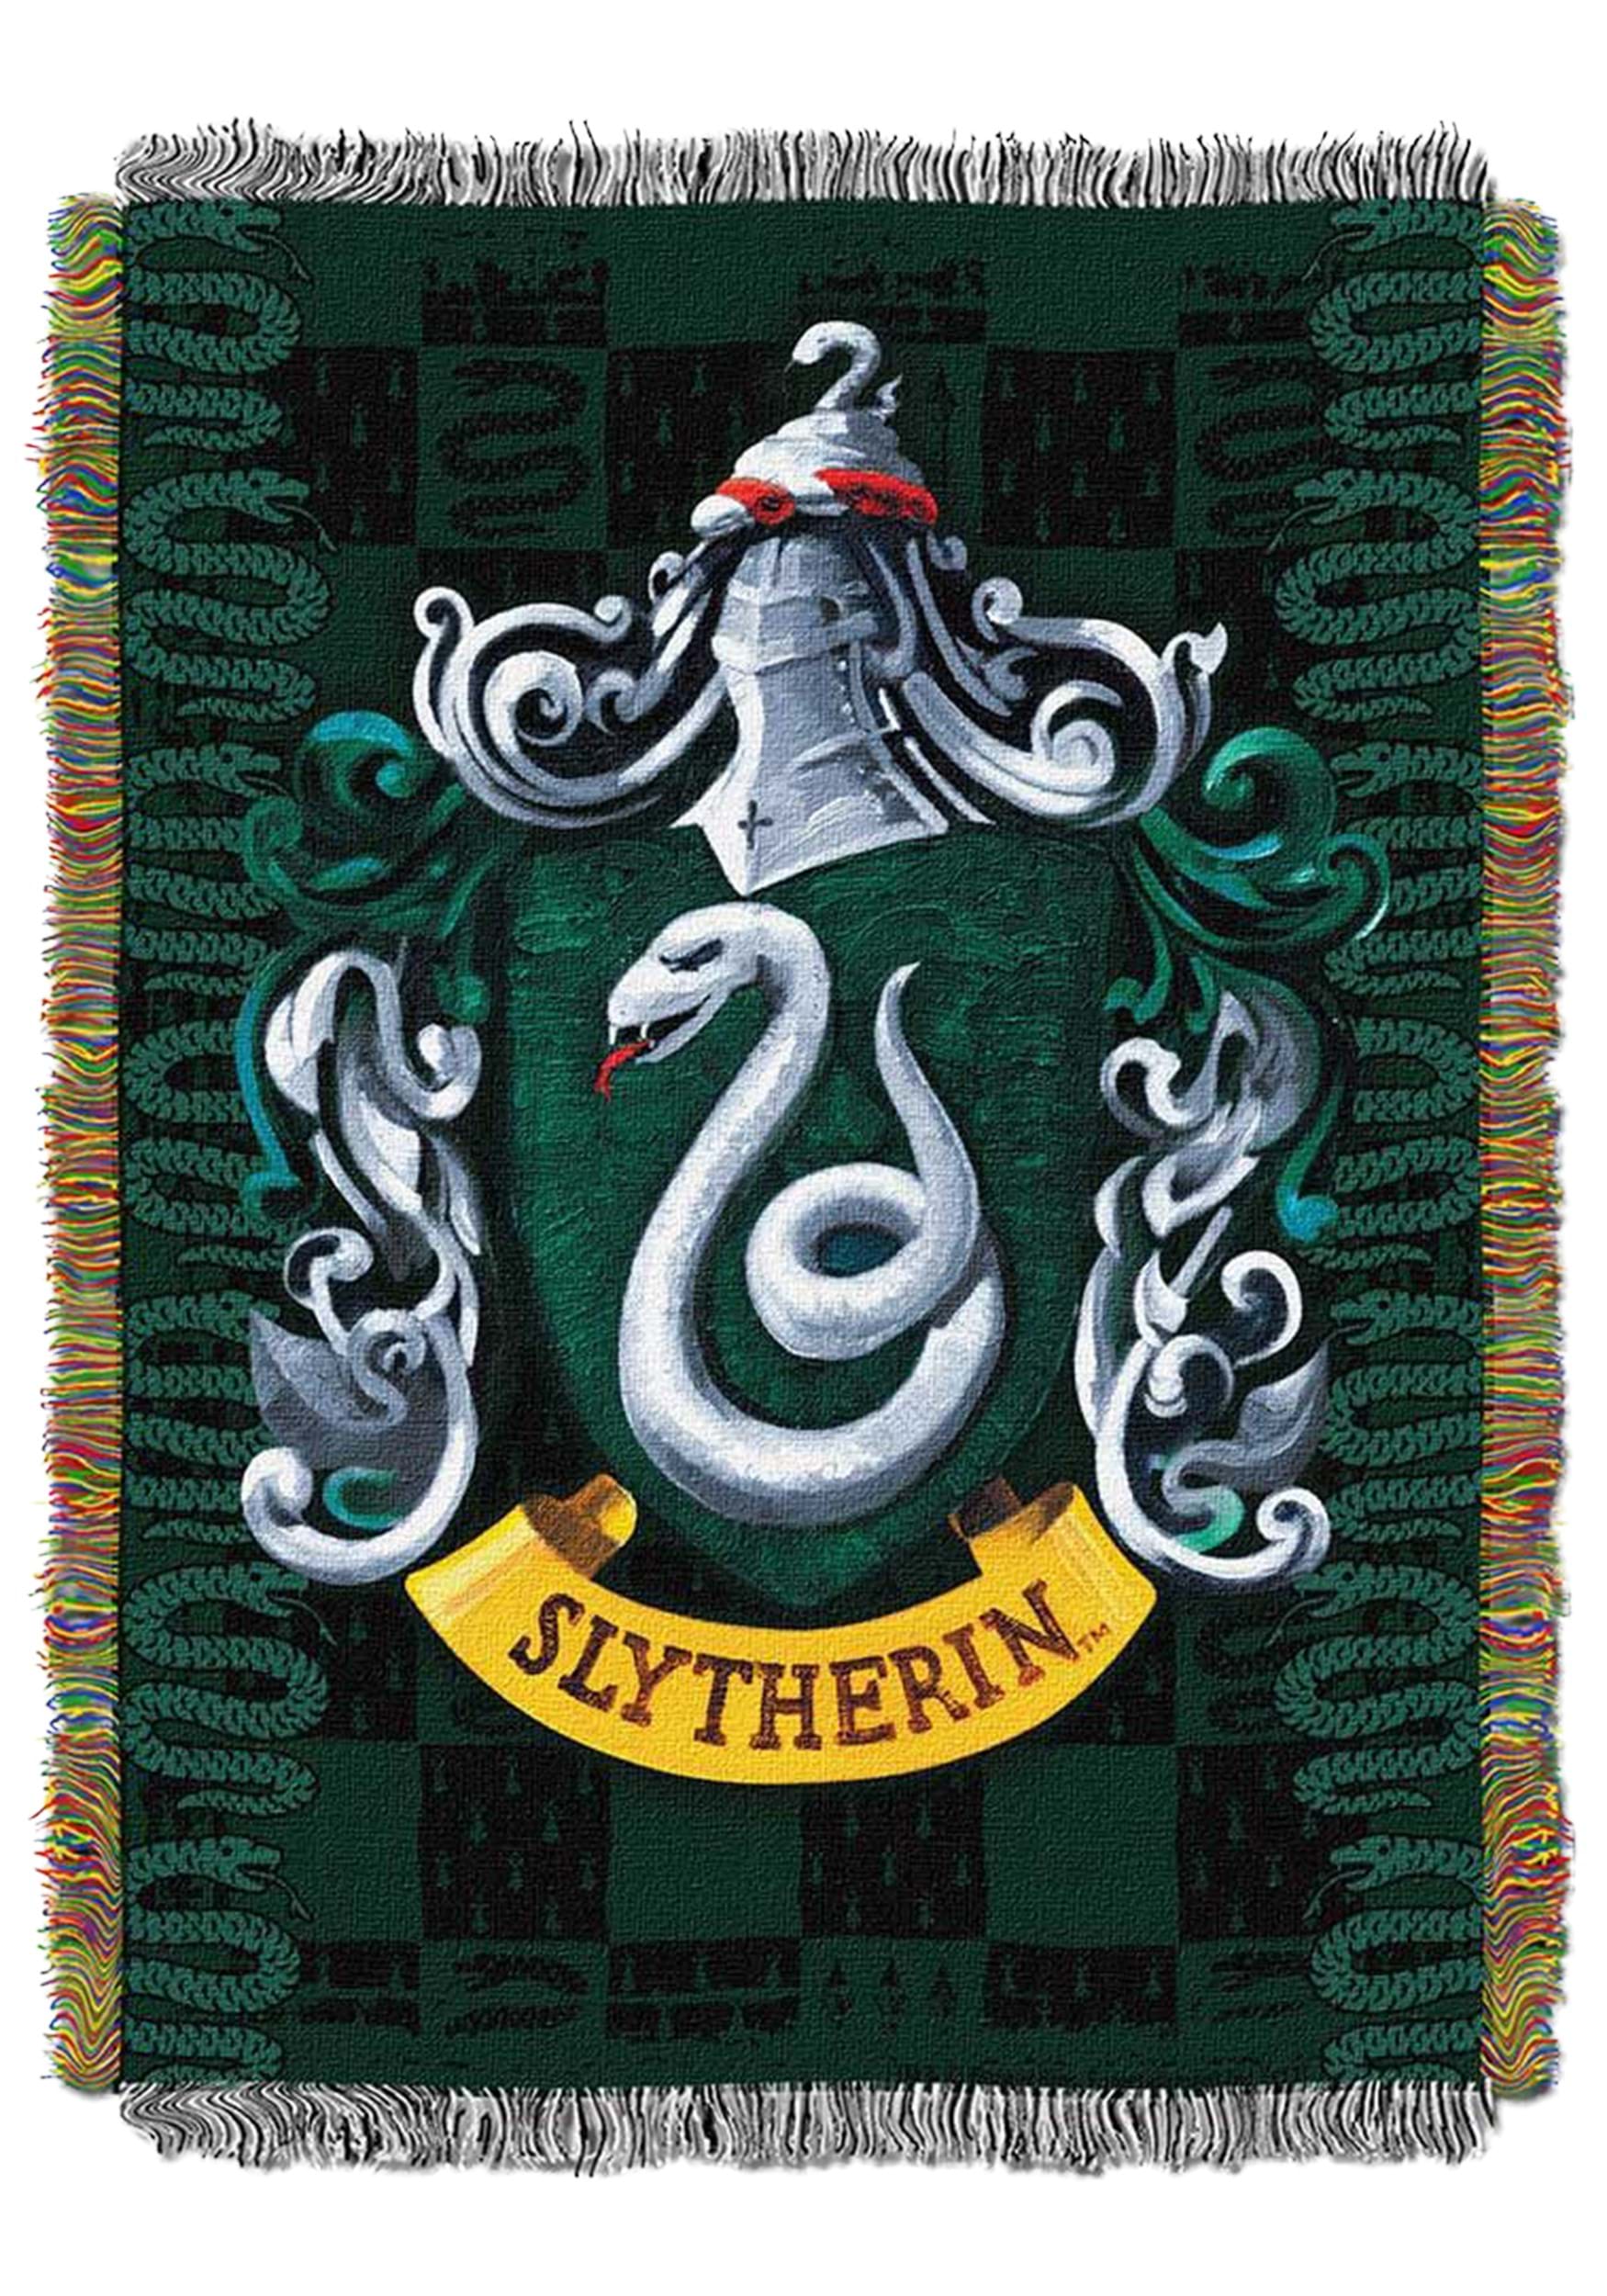 Detailed Harry Potter Slytherin Shield Woven Tapestry Blanket